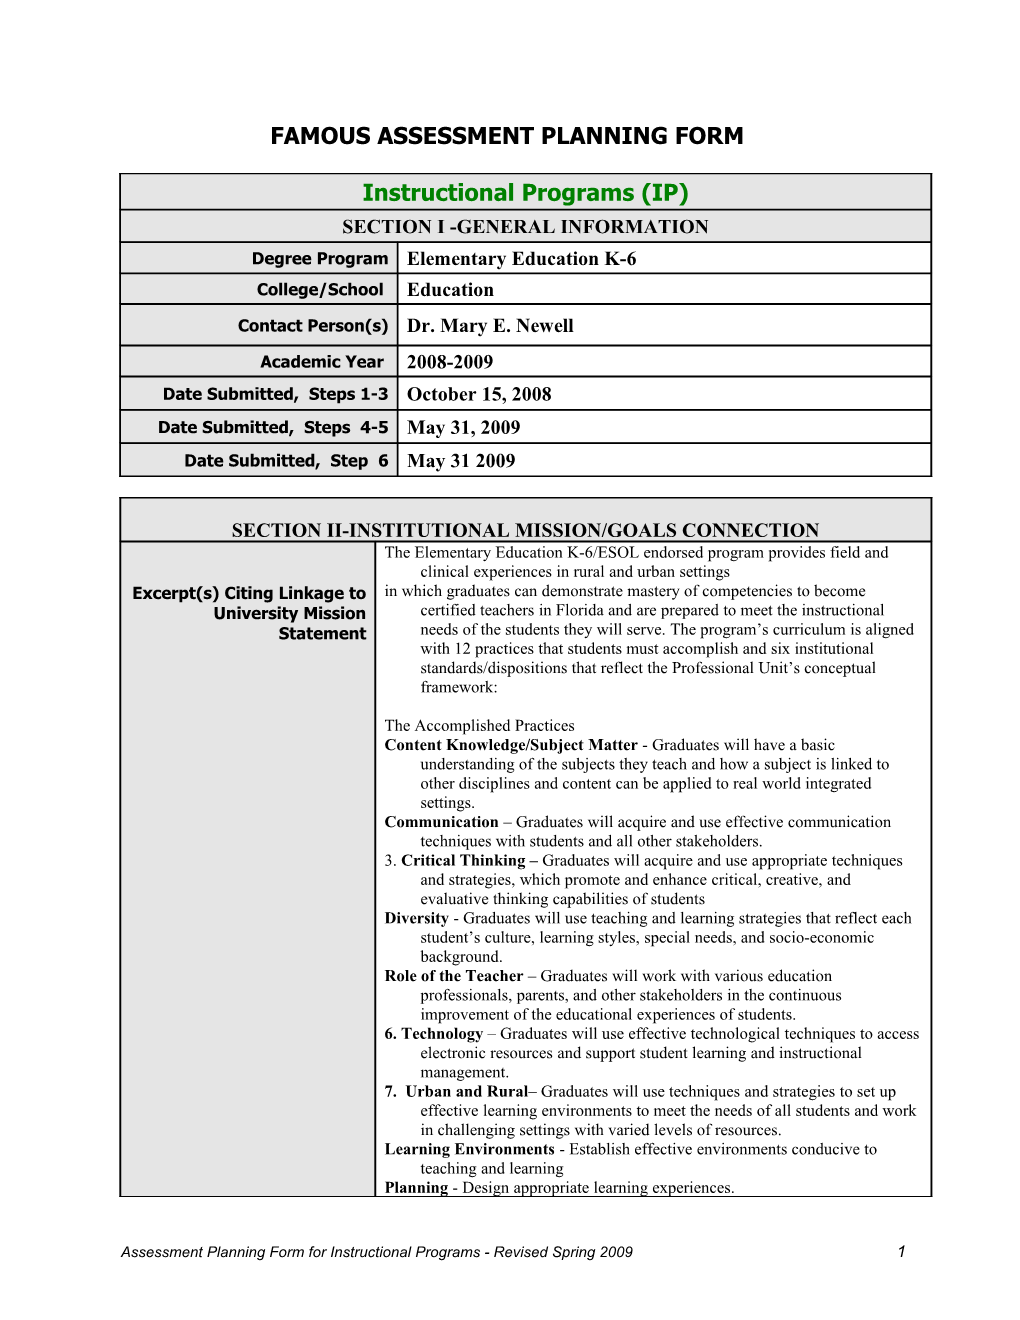 2008-2009 Famous Assessment Planning Form